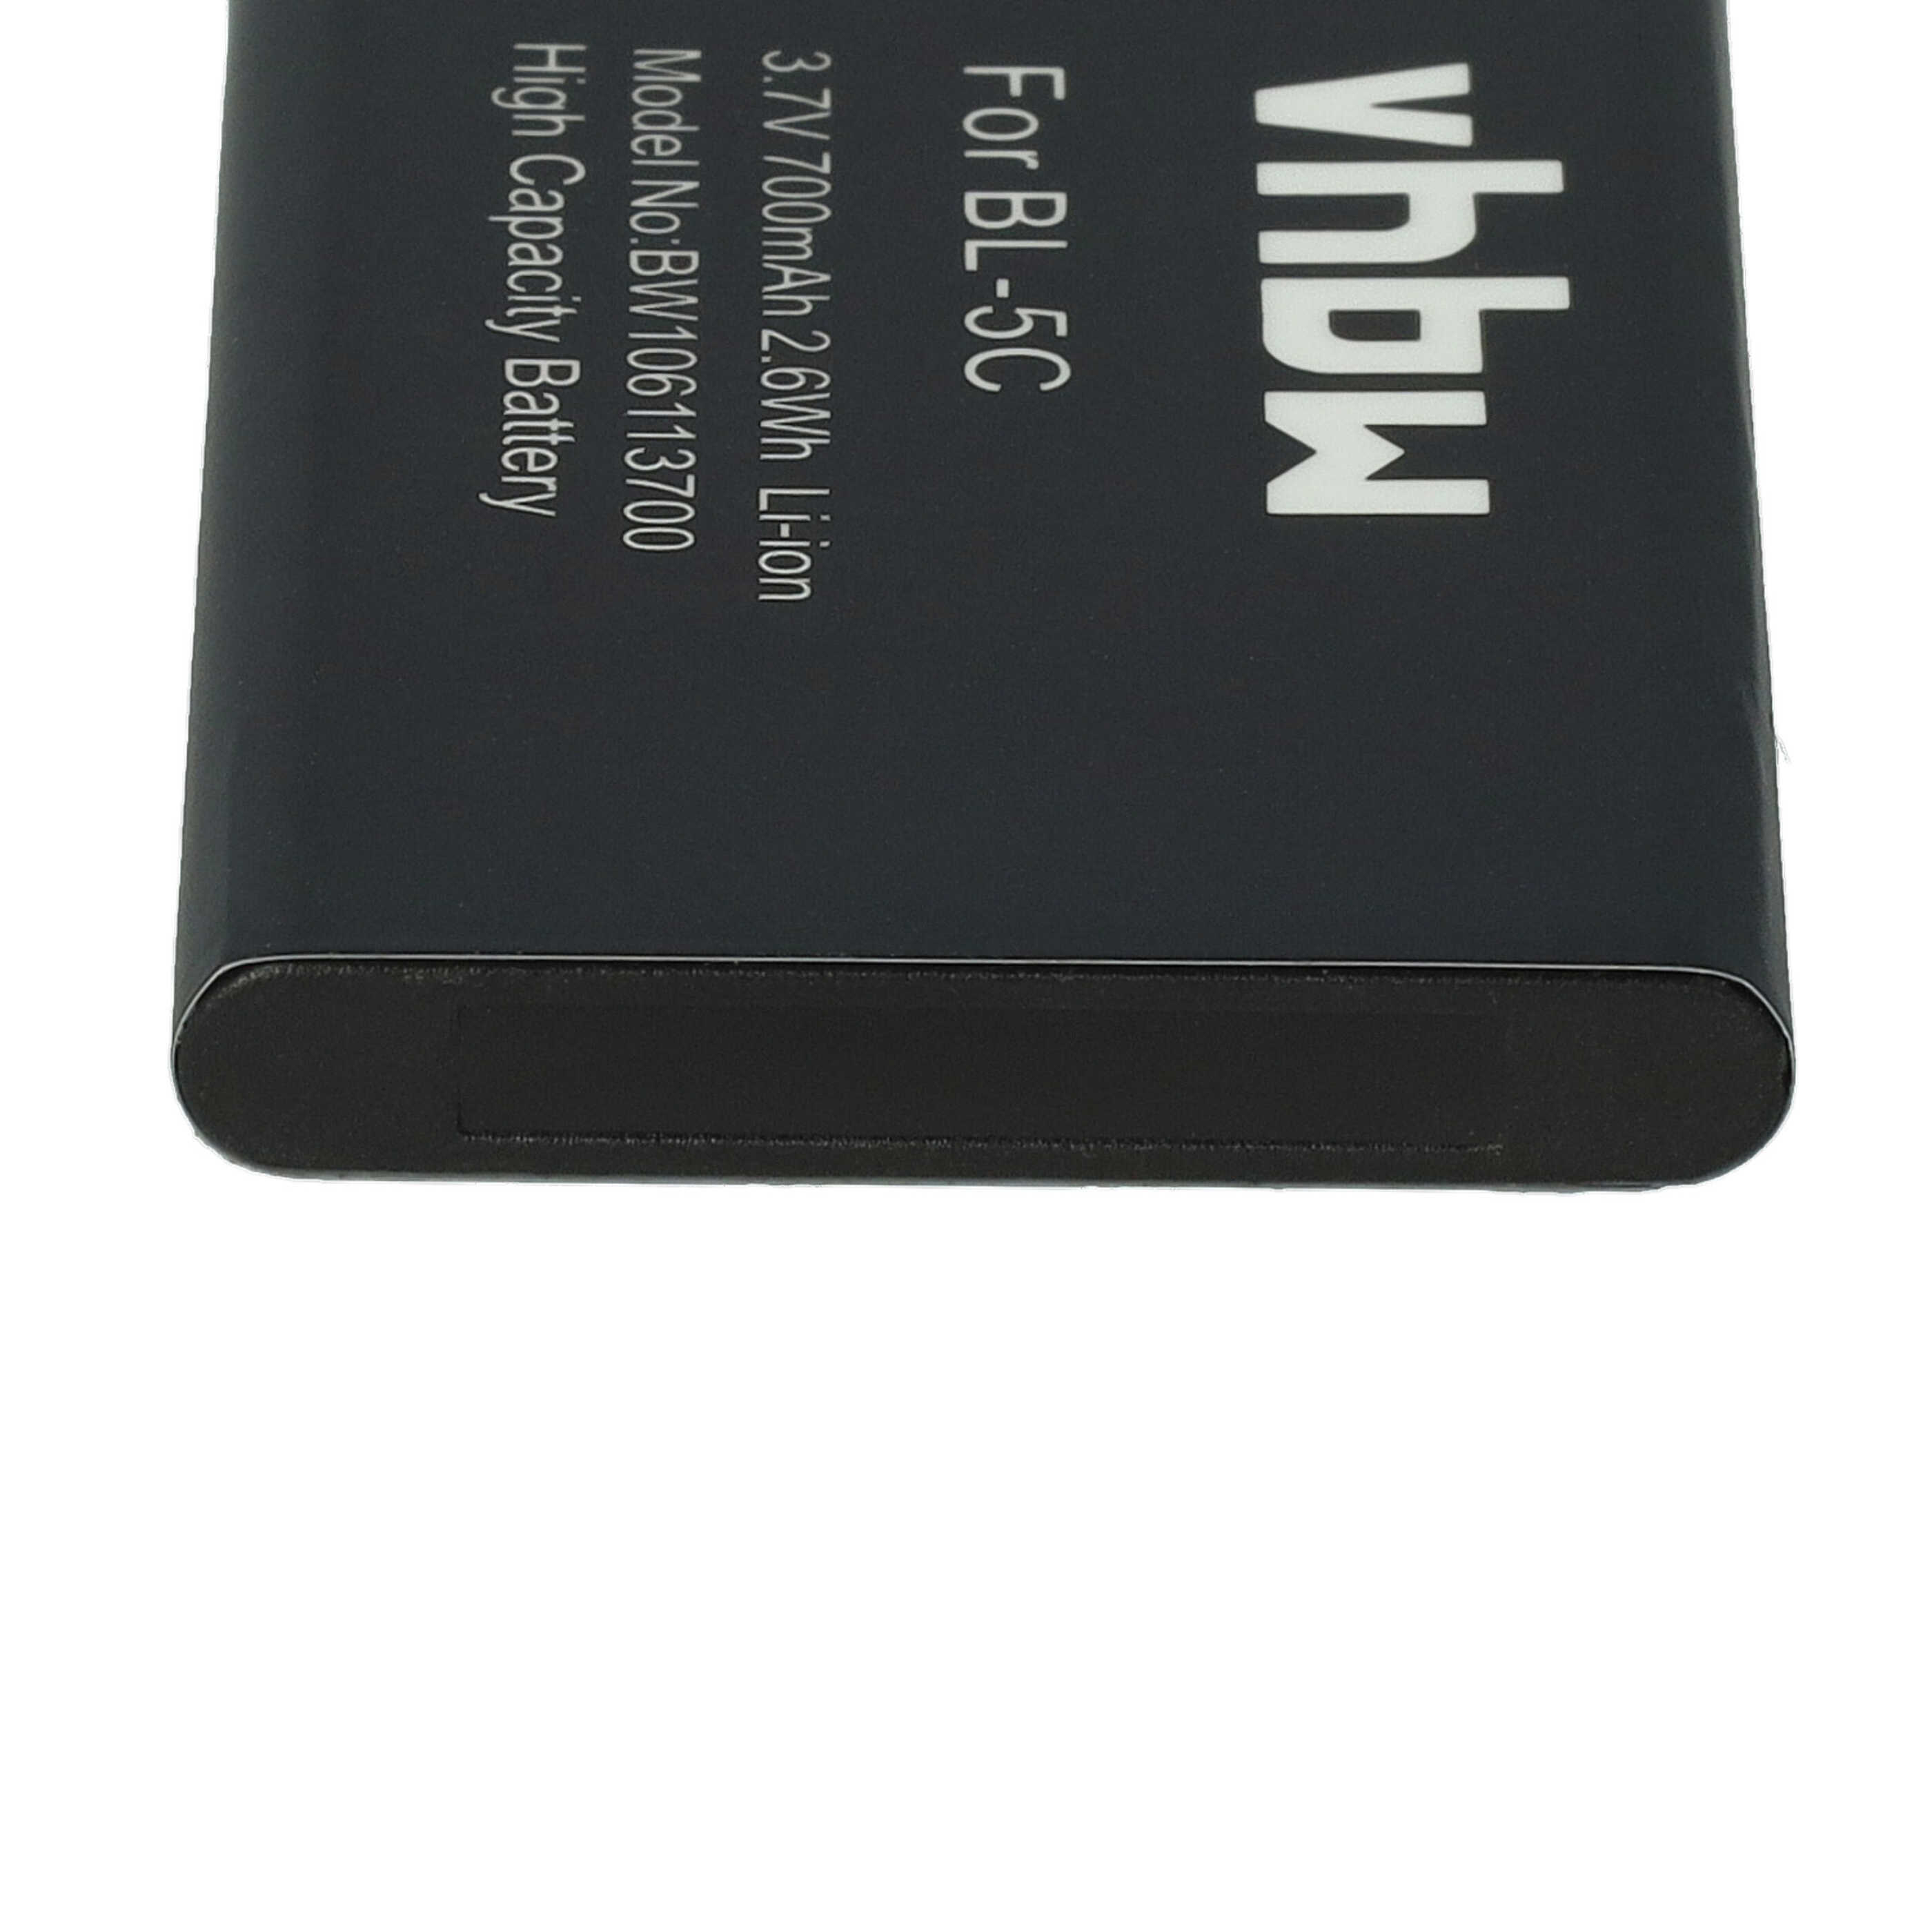 Bluetooth GPS Receiver Battery Replacement for HX-N3650A, BA-01, HXE-W01 - 700mAh 3.7V Li-Ion